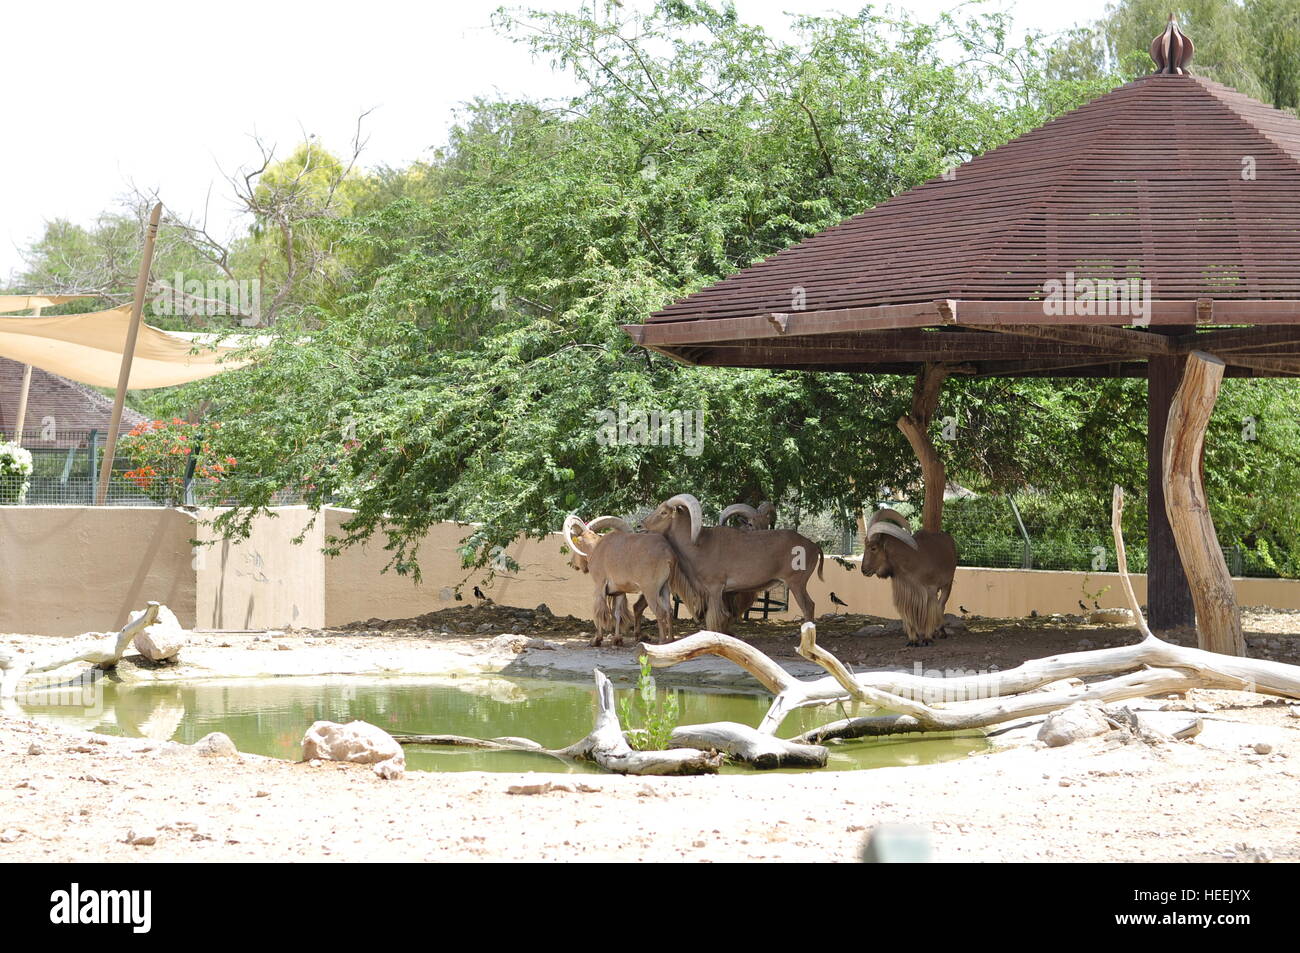 Ain Ain Zoo und Wildtiere Vögel Reptilien Giraffe Schildkröten Schlangen Krokodile Löwe Stockfoto